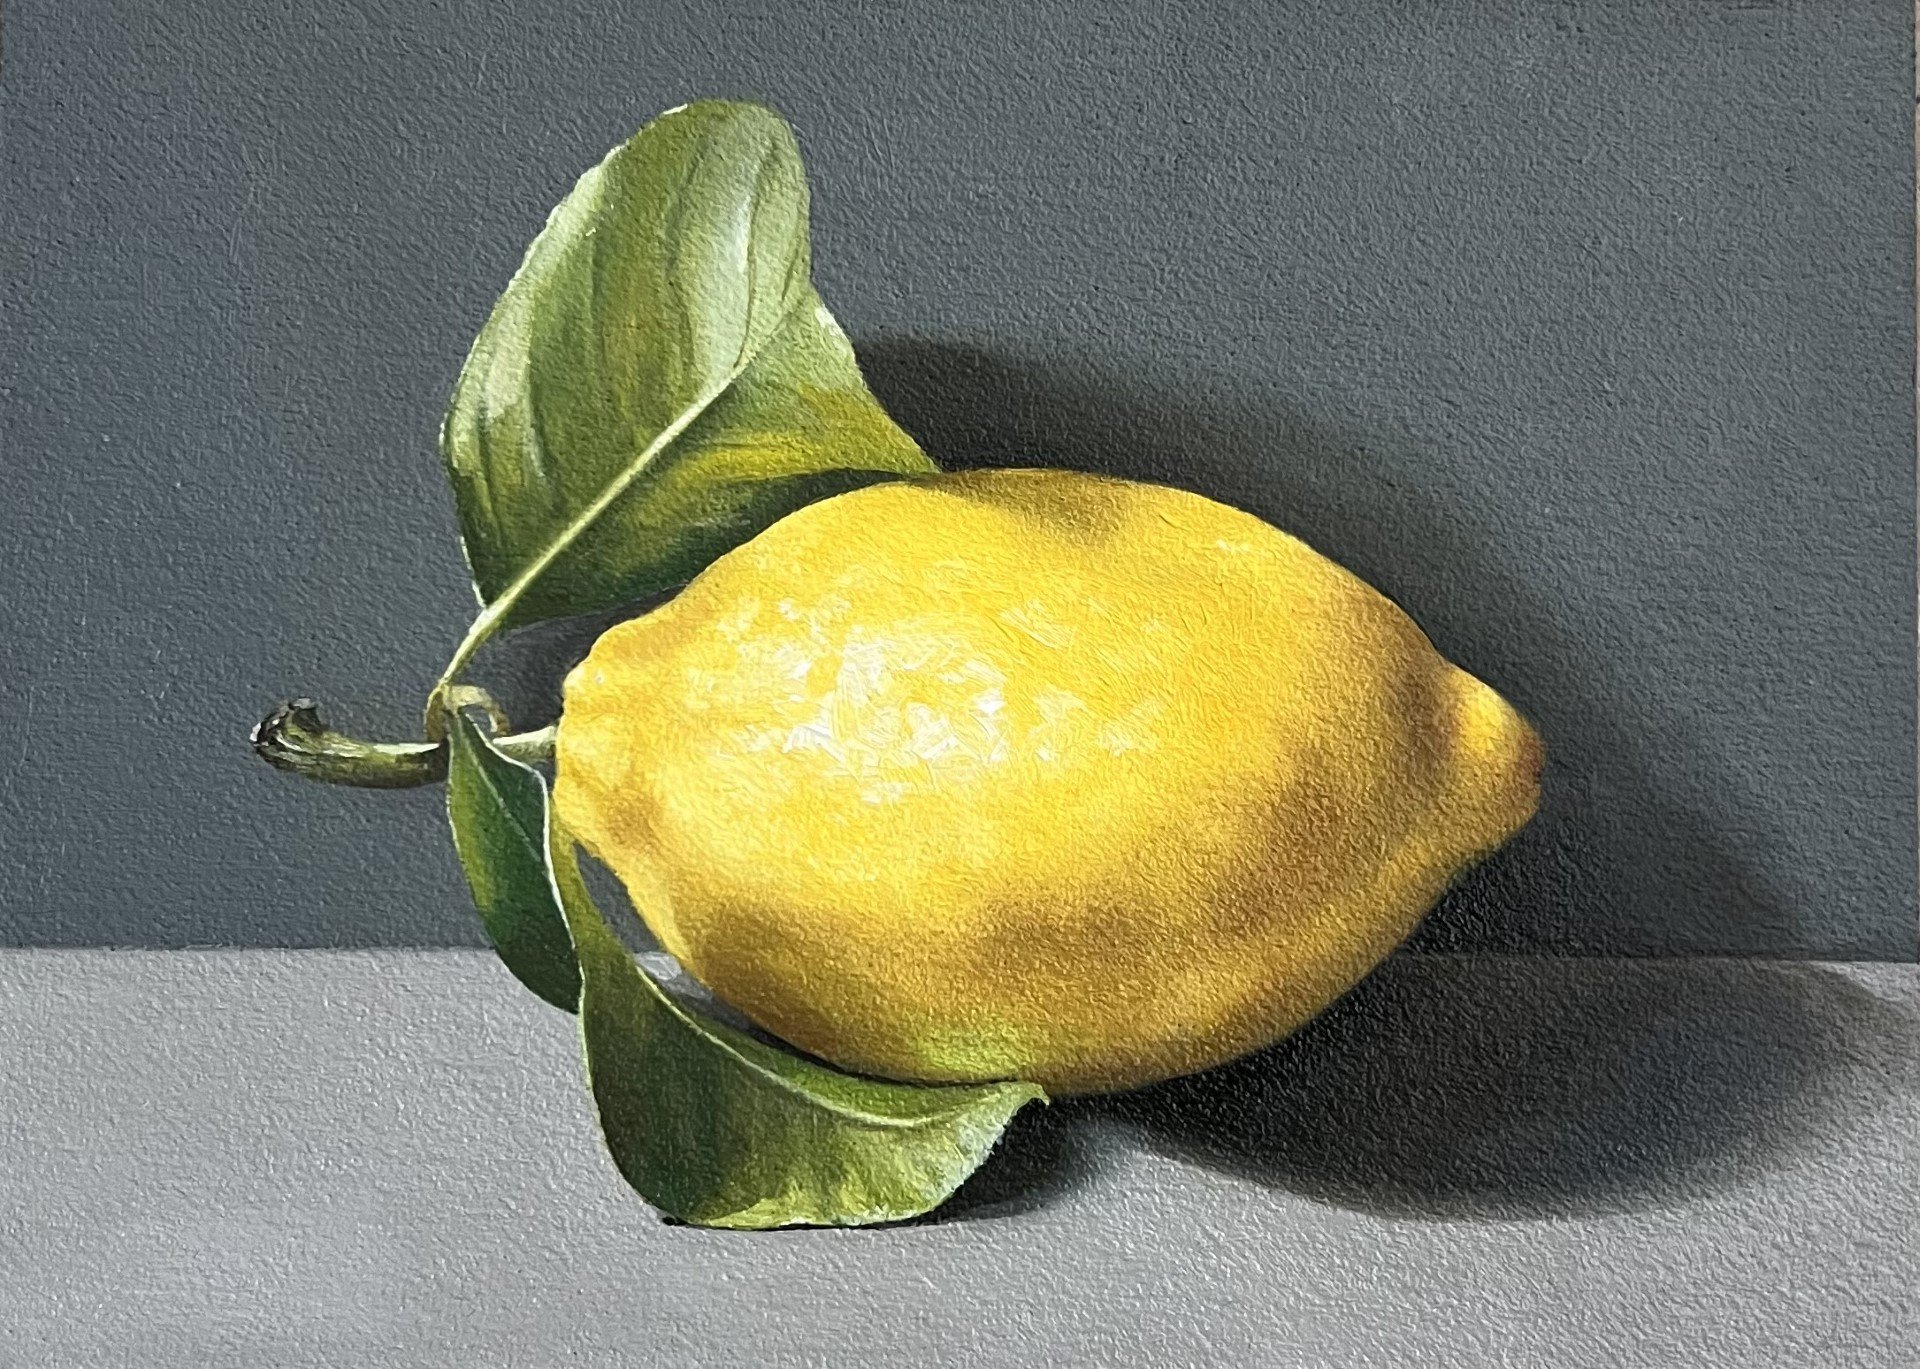 Leafy lemon study